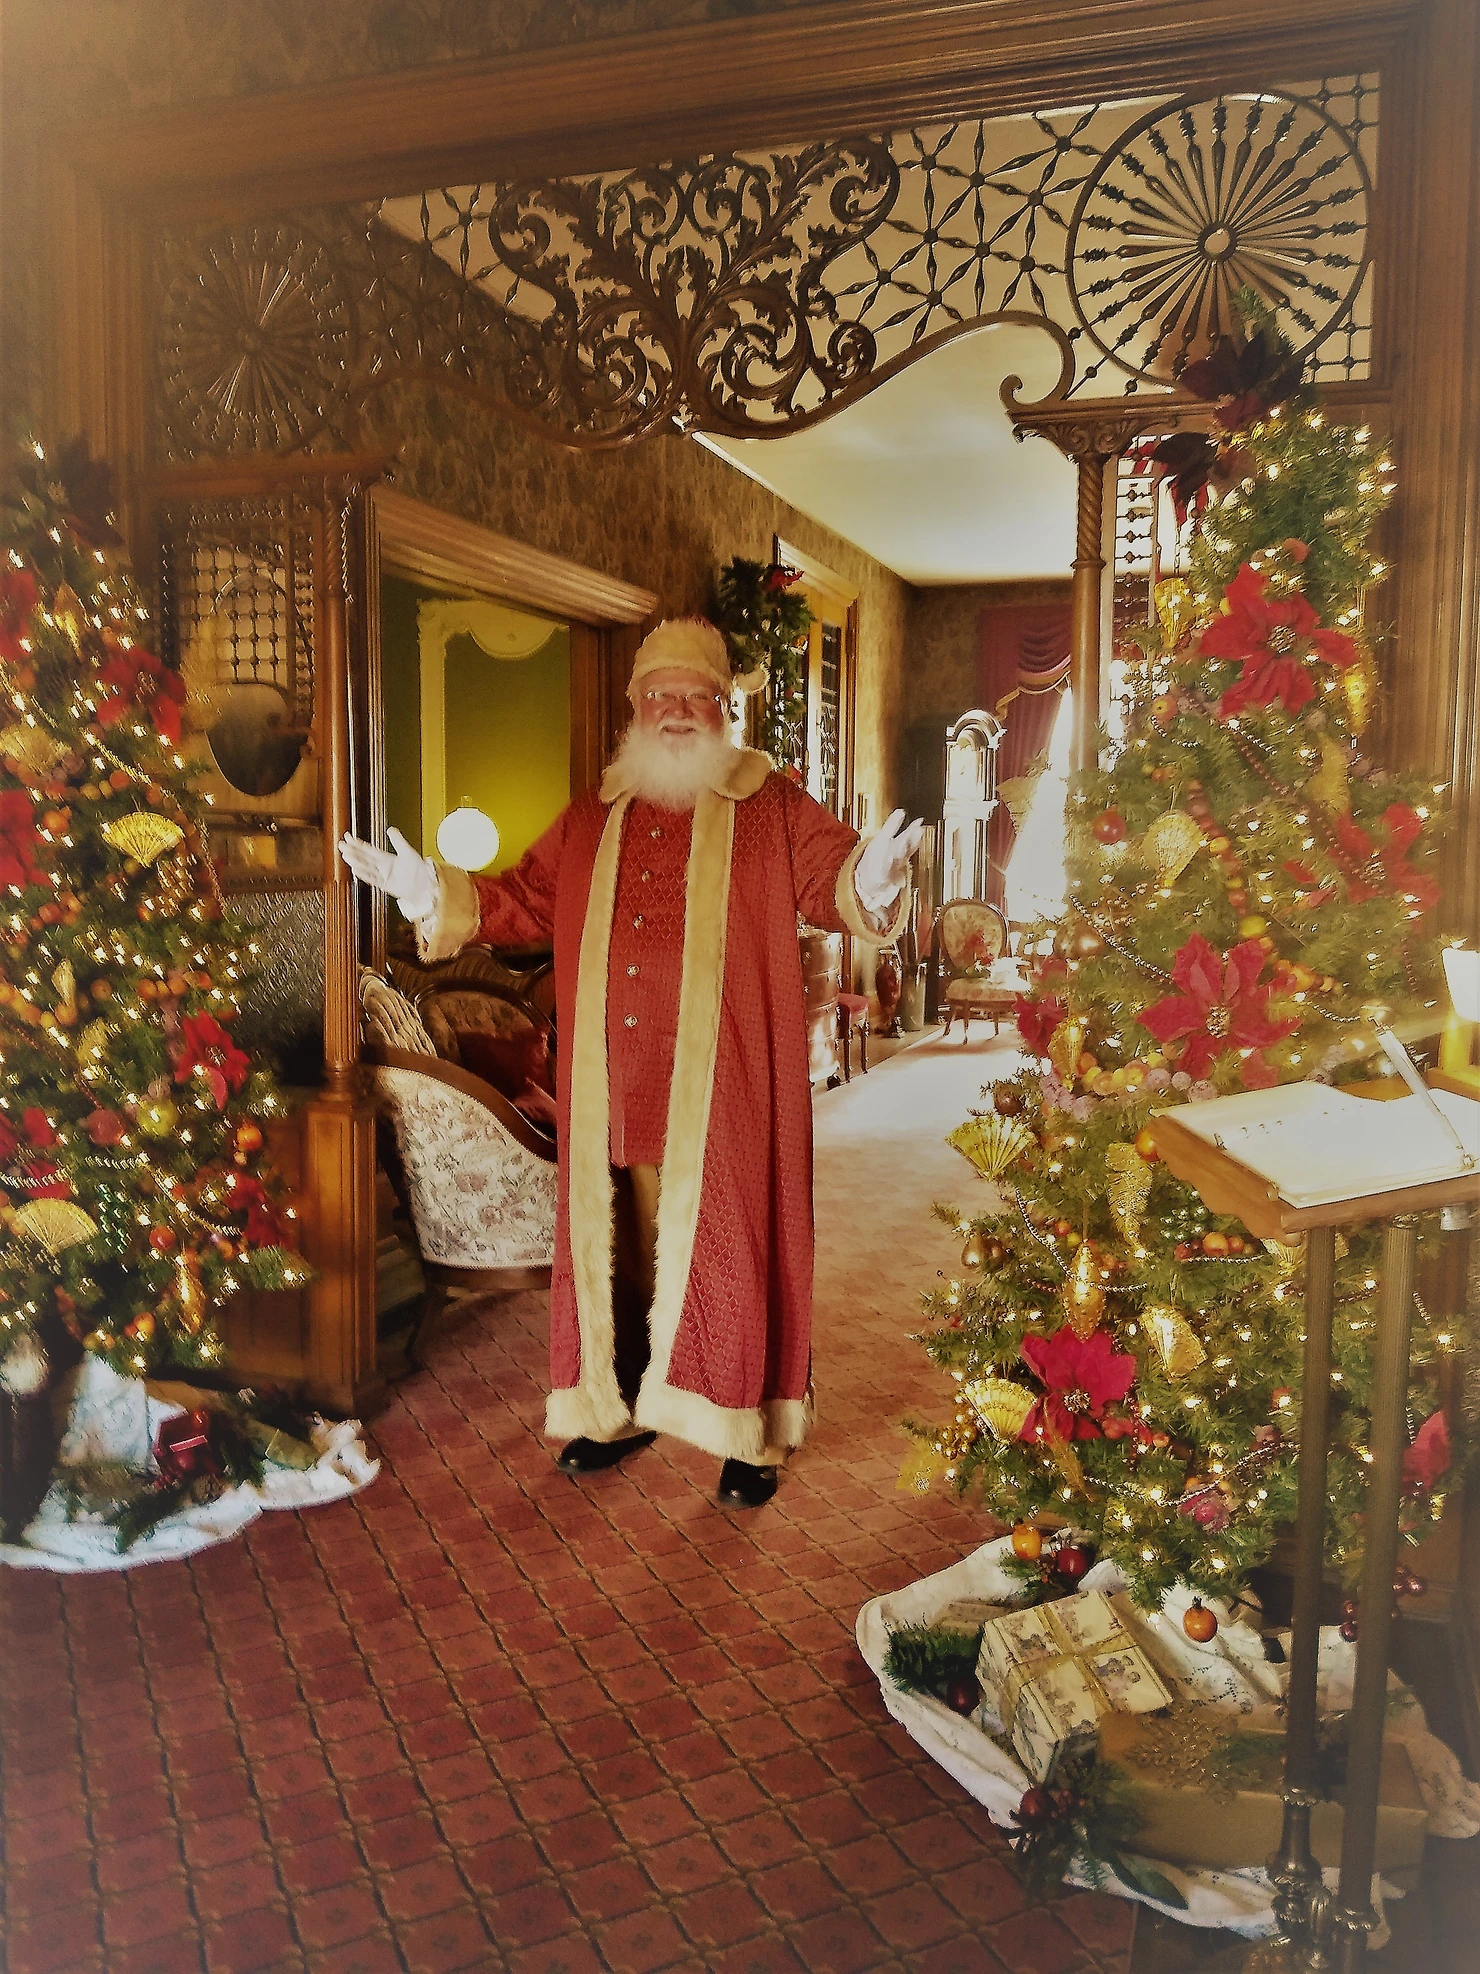 Santa welcomes Christmas to Belmont County, Ohio.